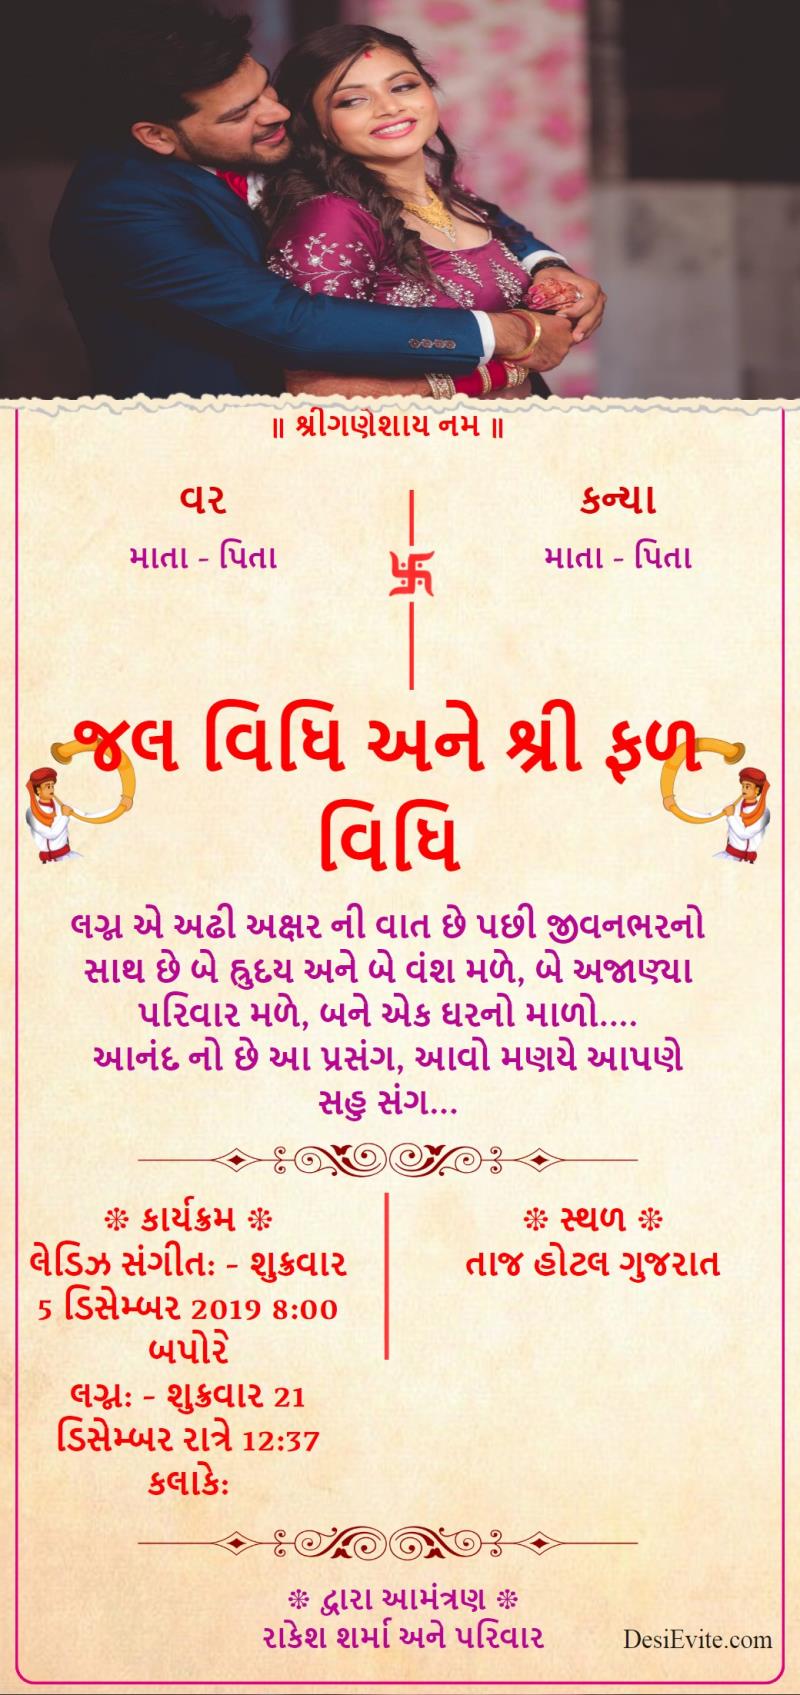 Gujarati latest wedding card with couple pre wedding photo template 96 118